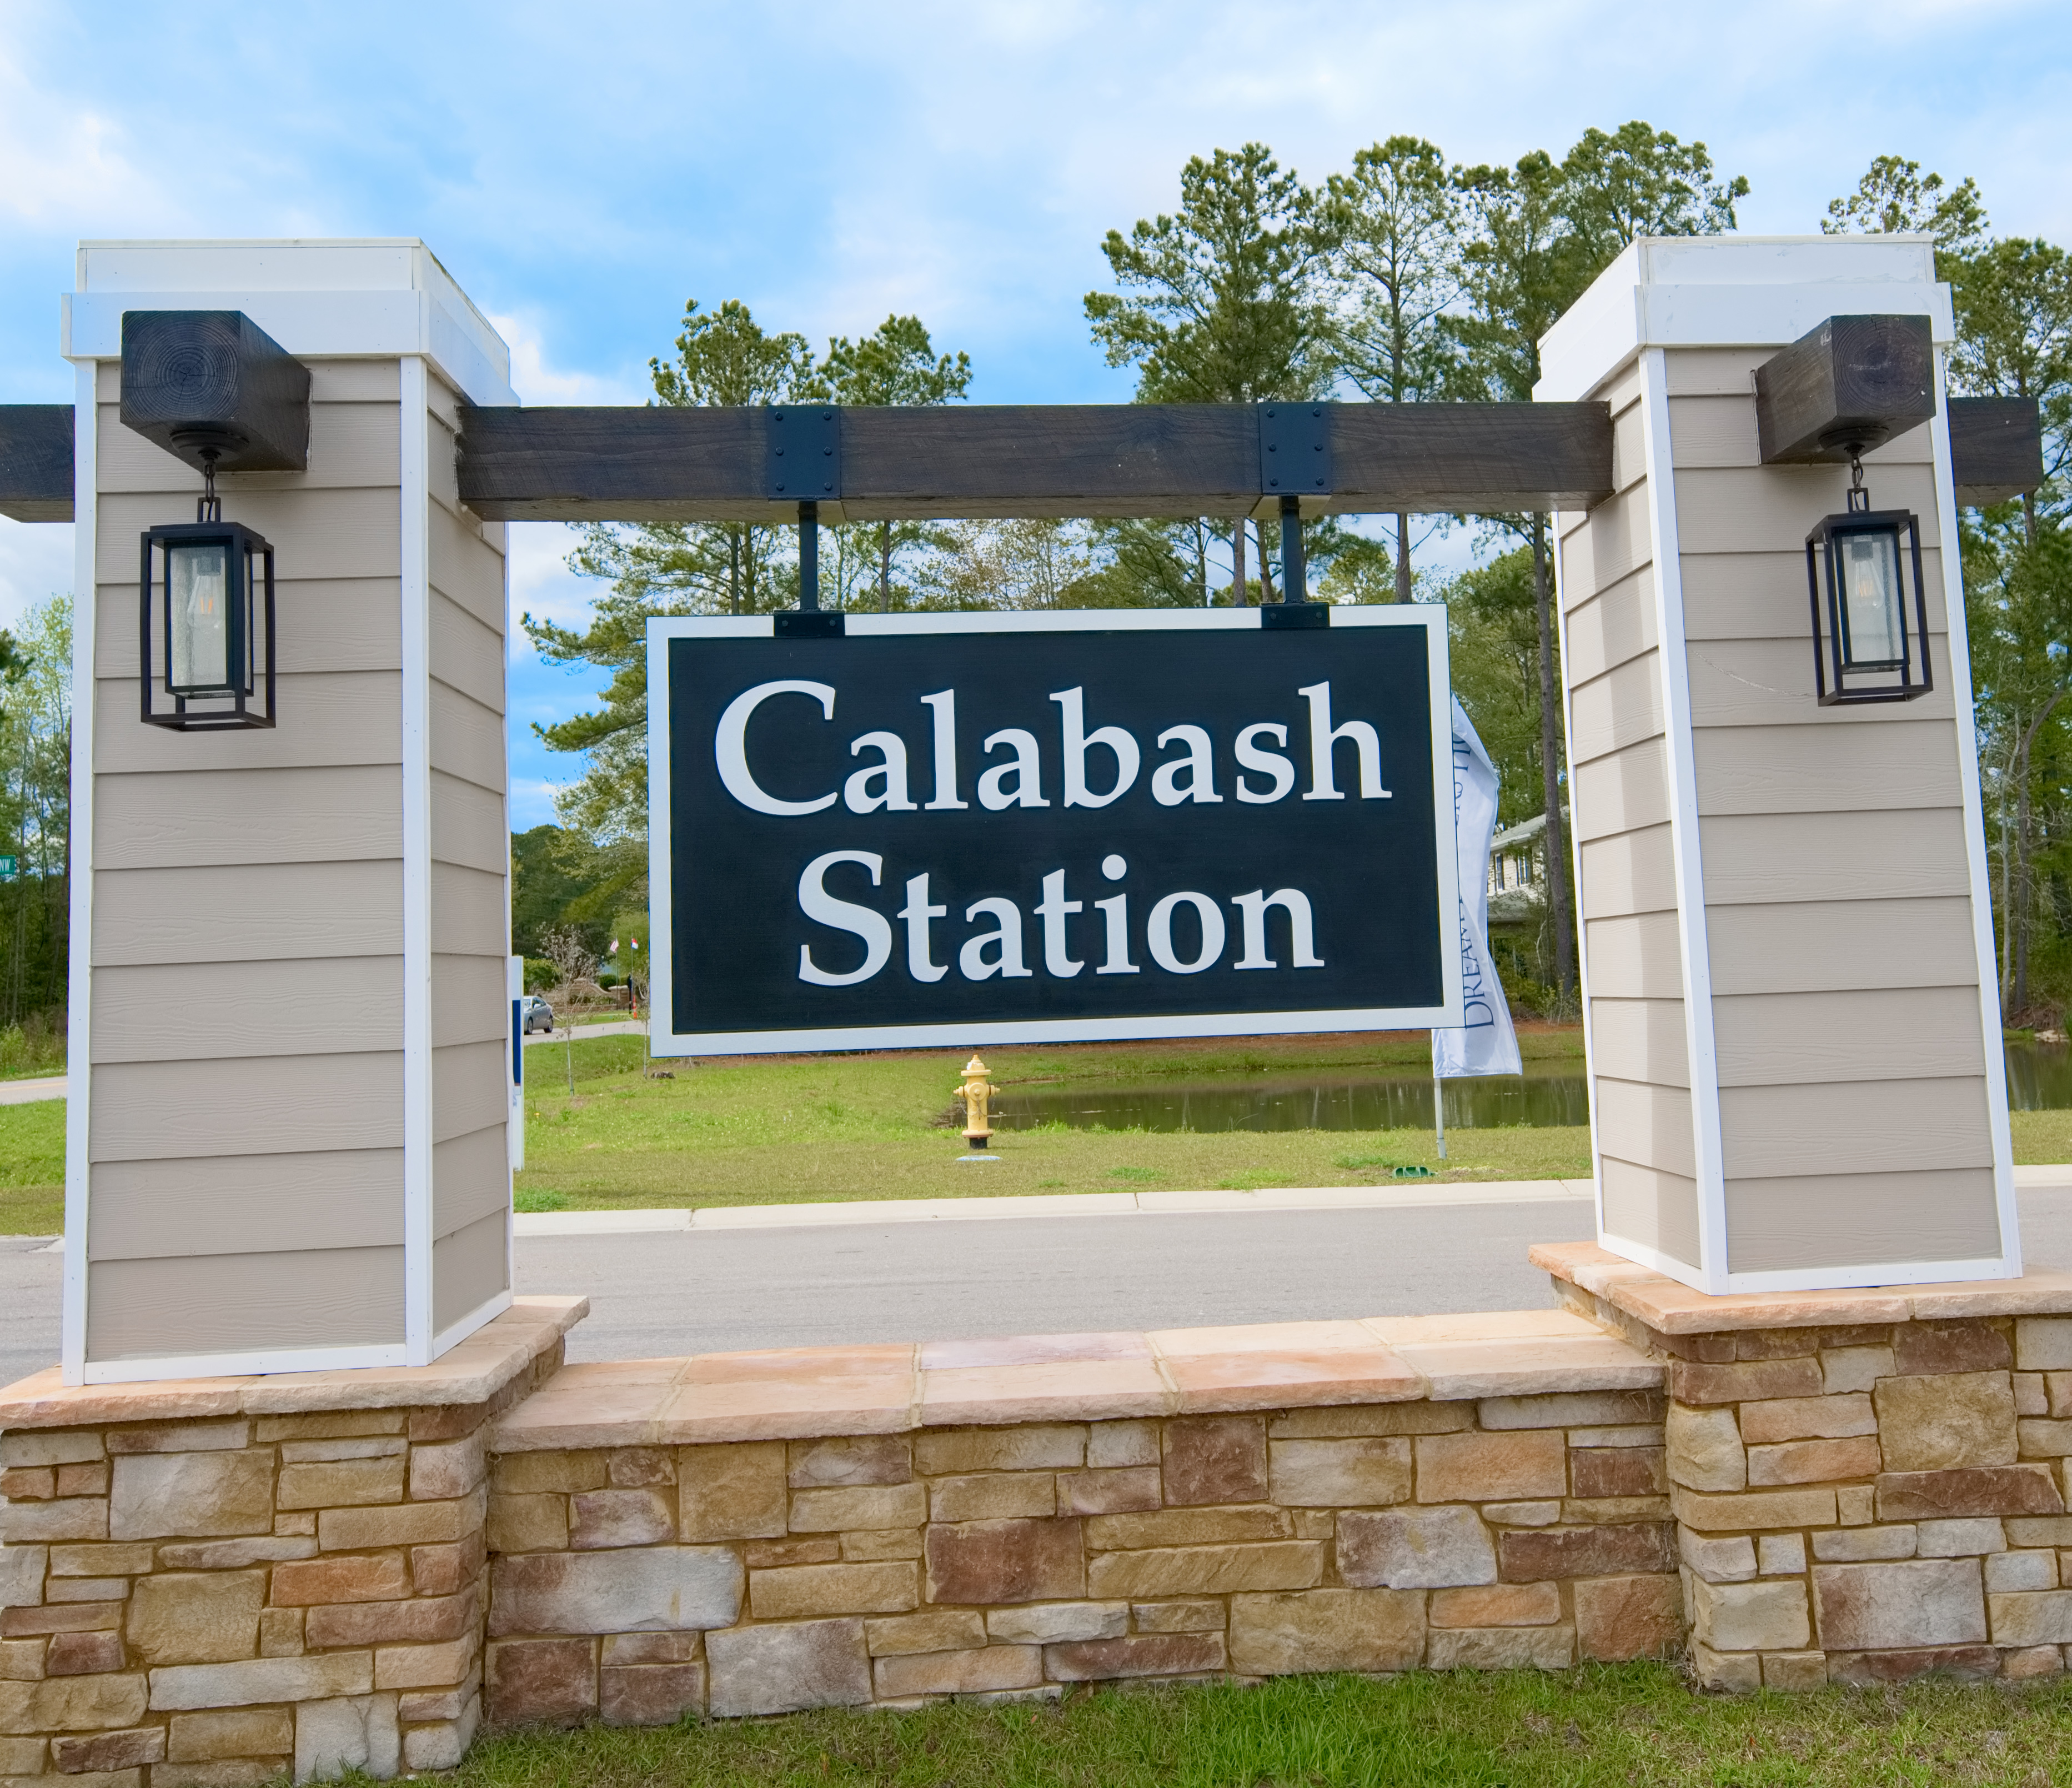 Calabash Station in Calabash, NC